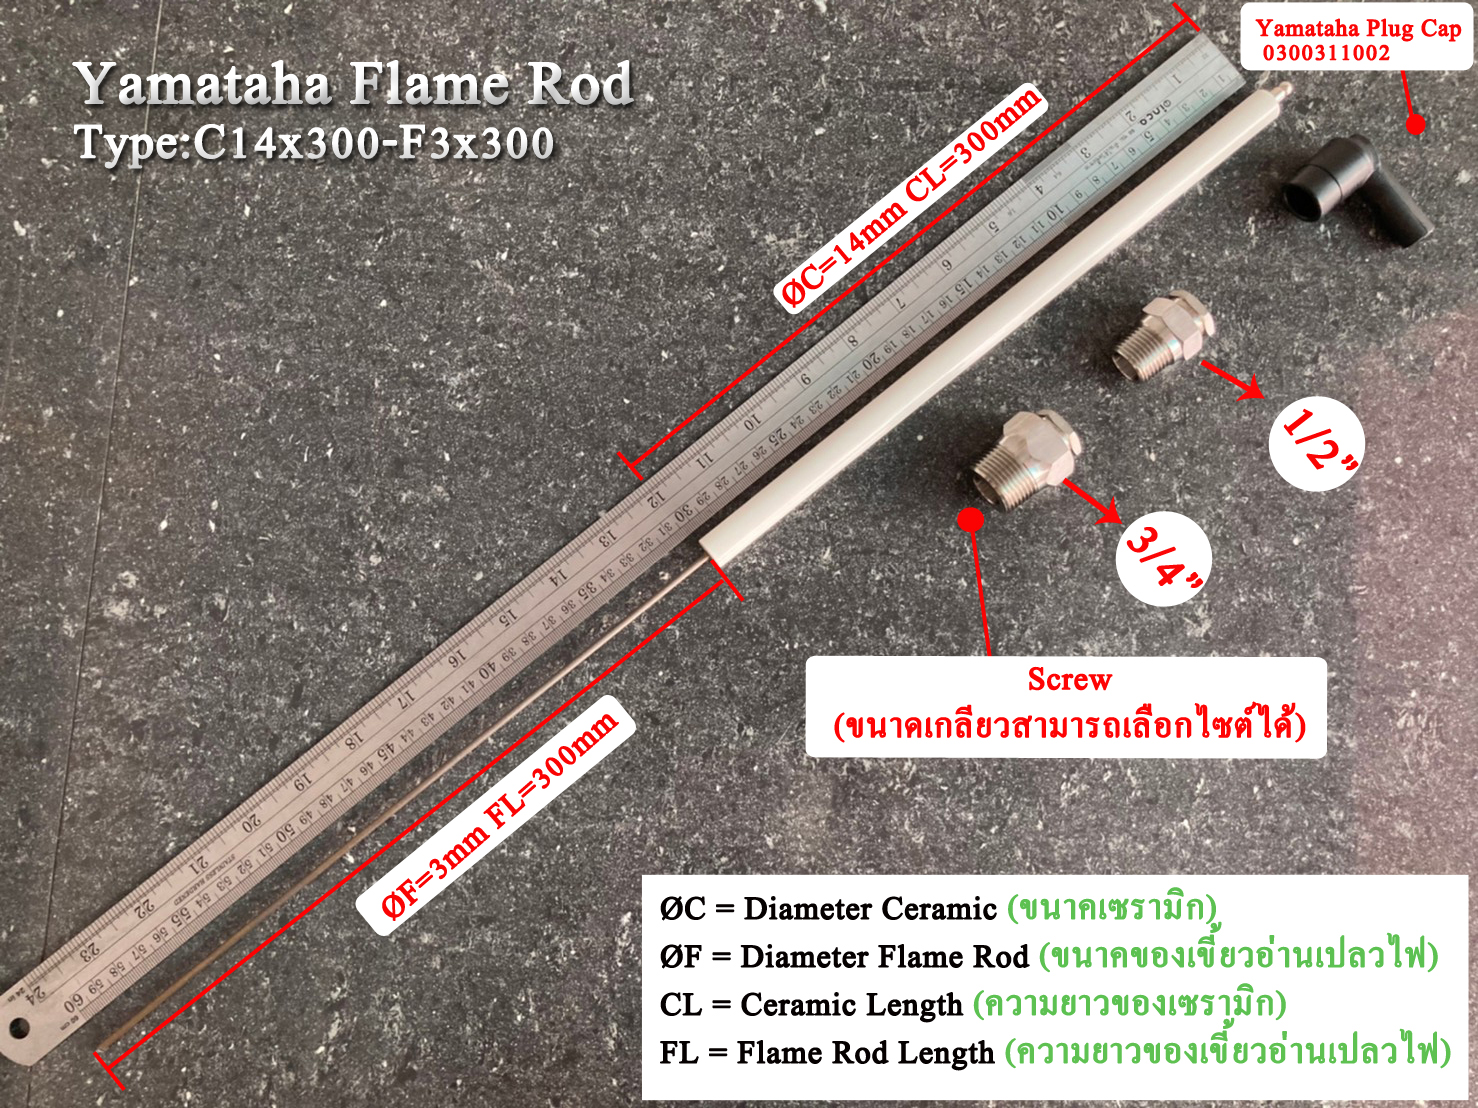 Yamataha Flame Rod C14x300-F3x300